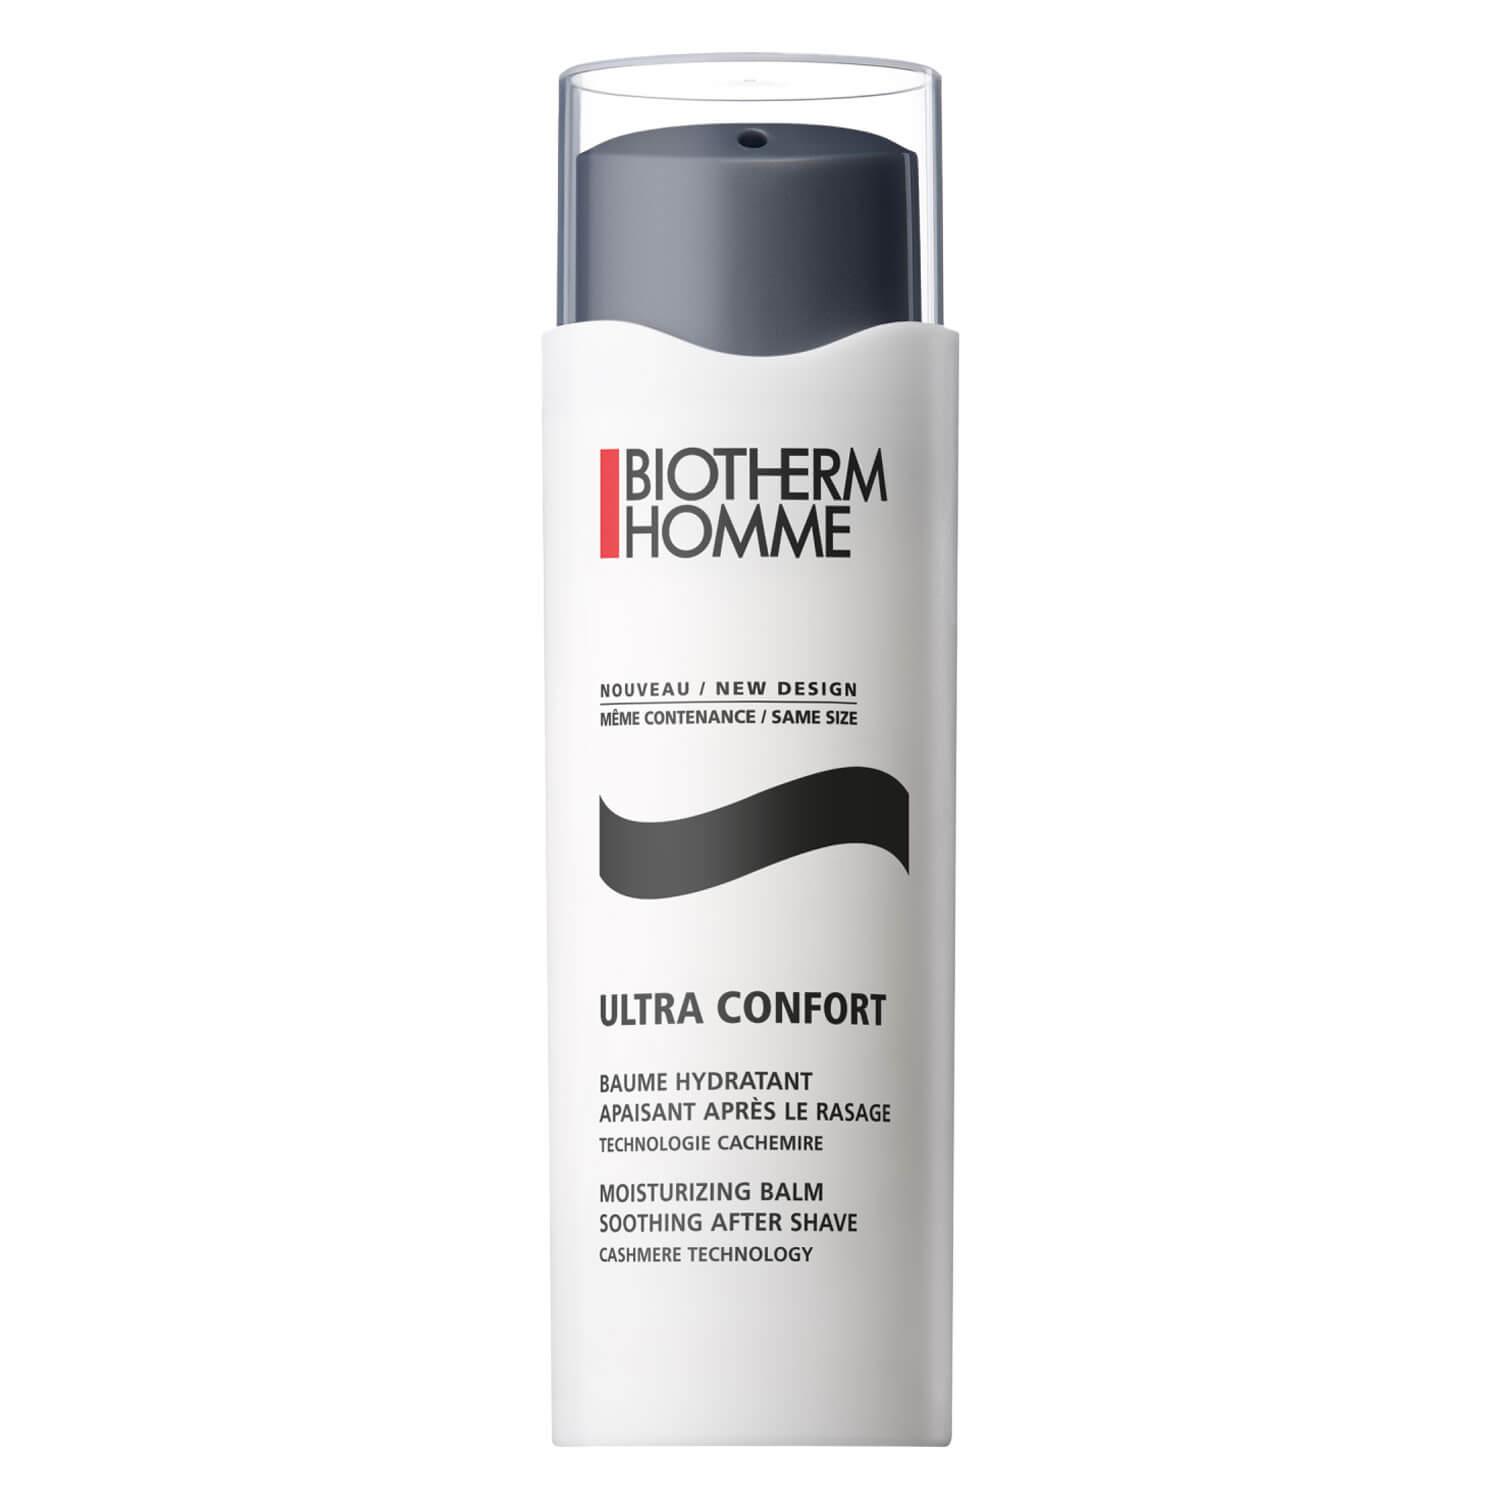 Biotherm Homme - Basics Line Confort Balm